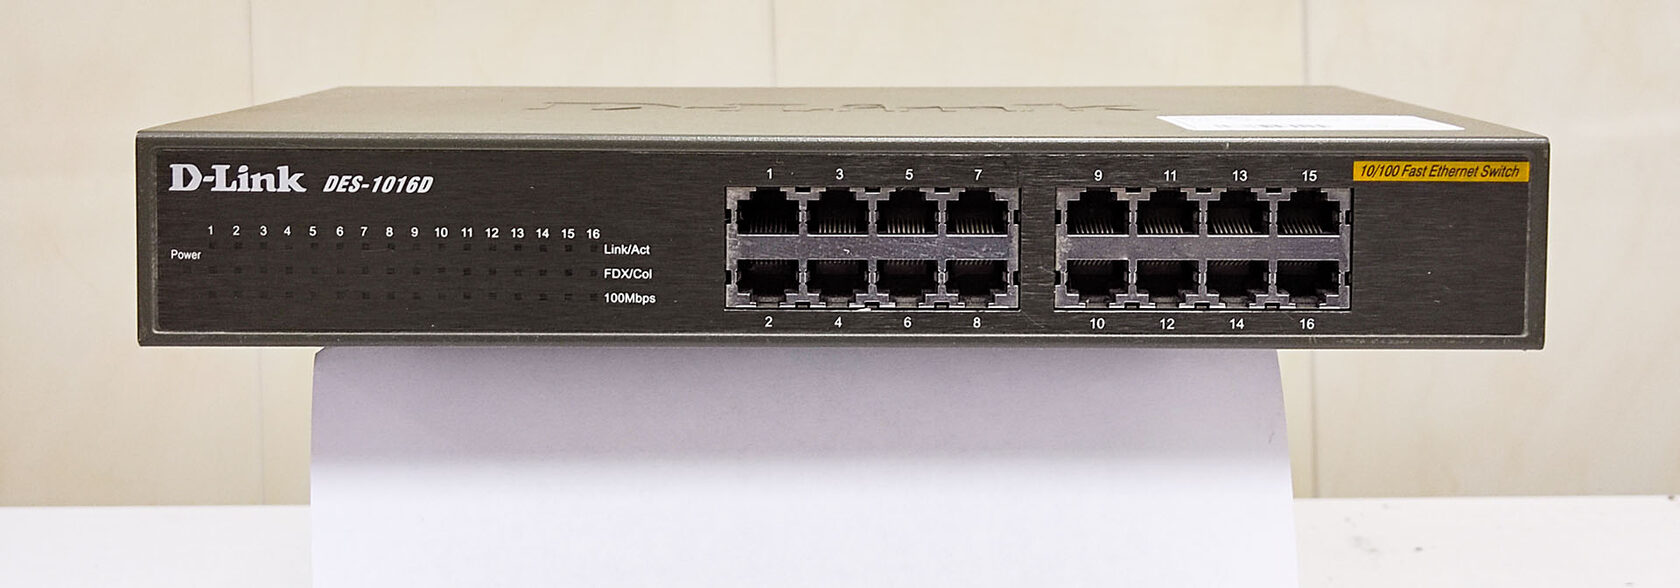 Коммутатор D-Link DES-1016D, 10/100 Fast Ethernet Switch, 16 портов